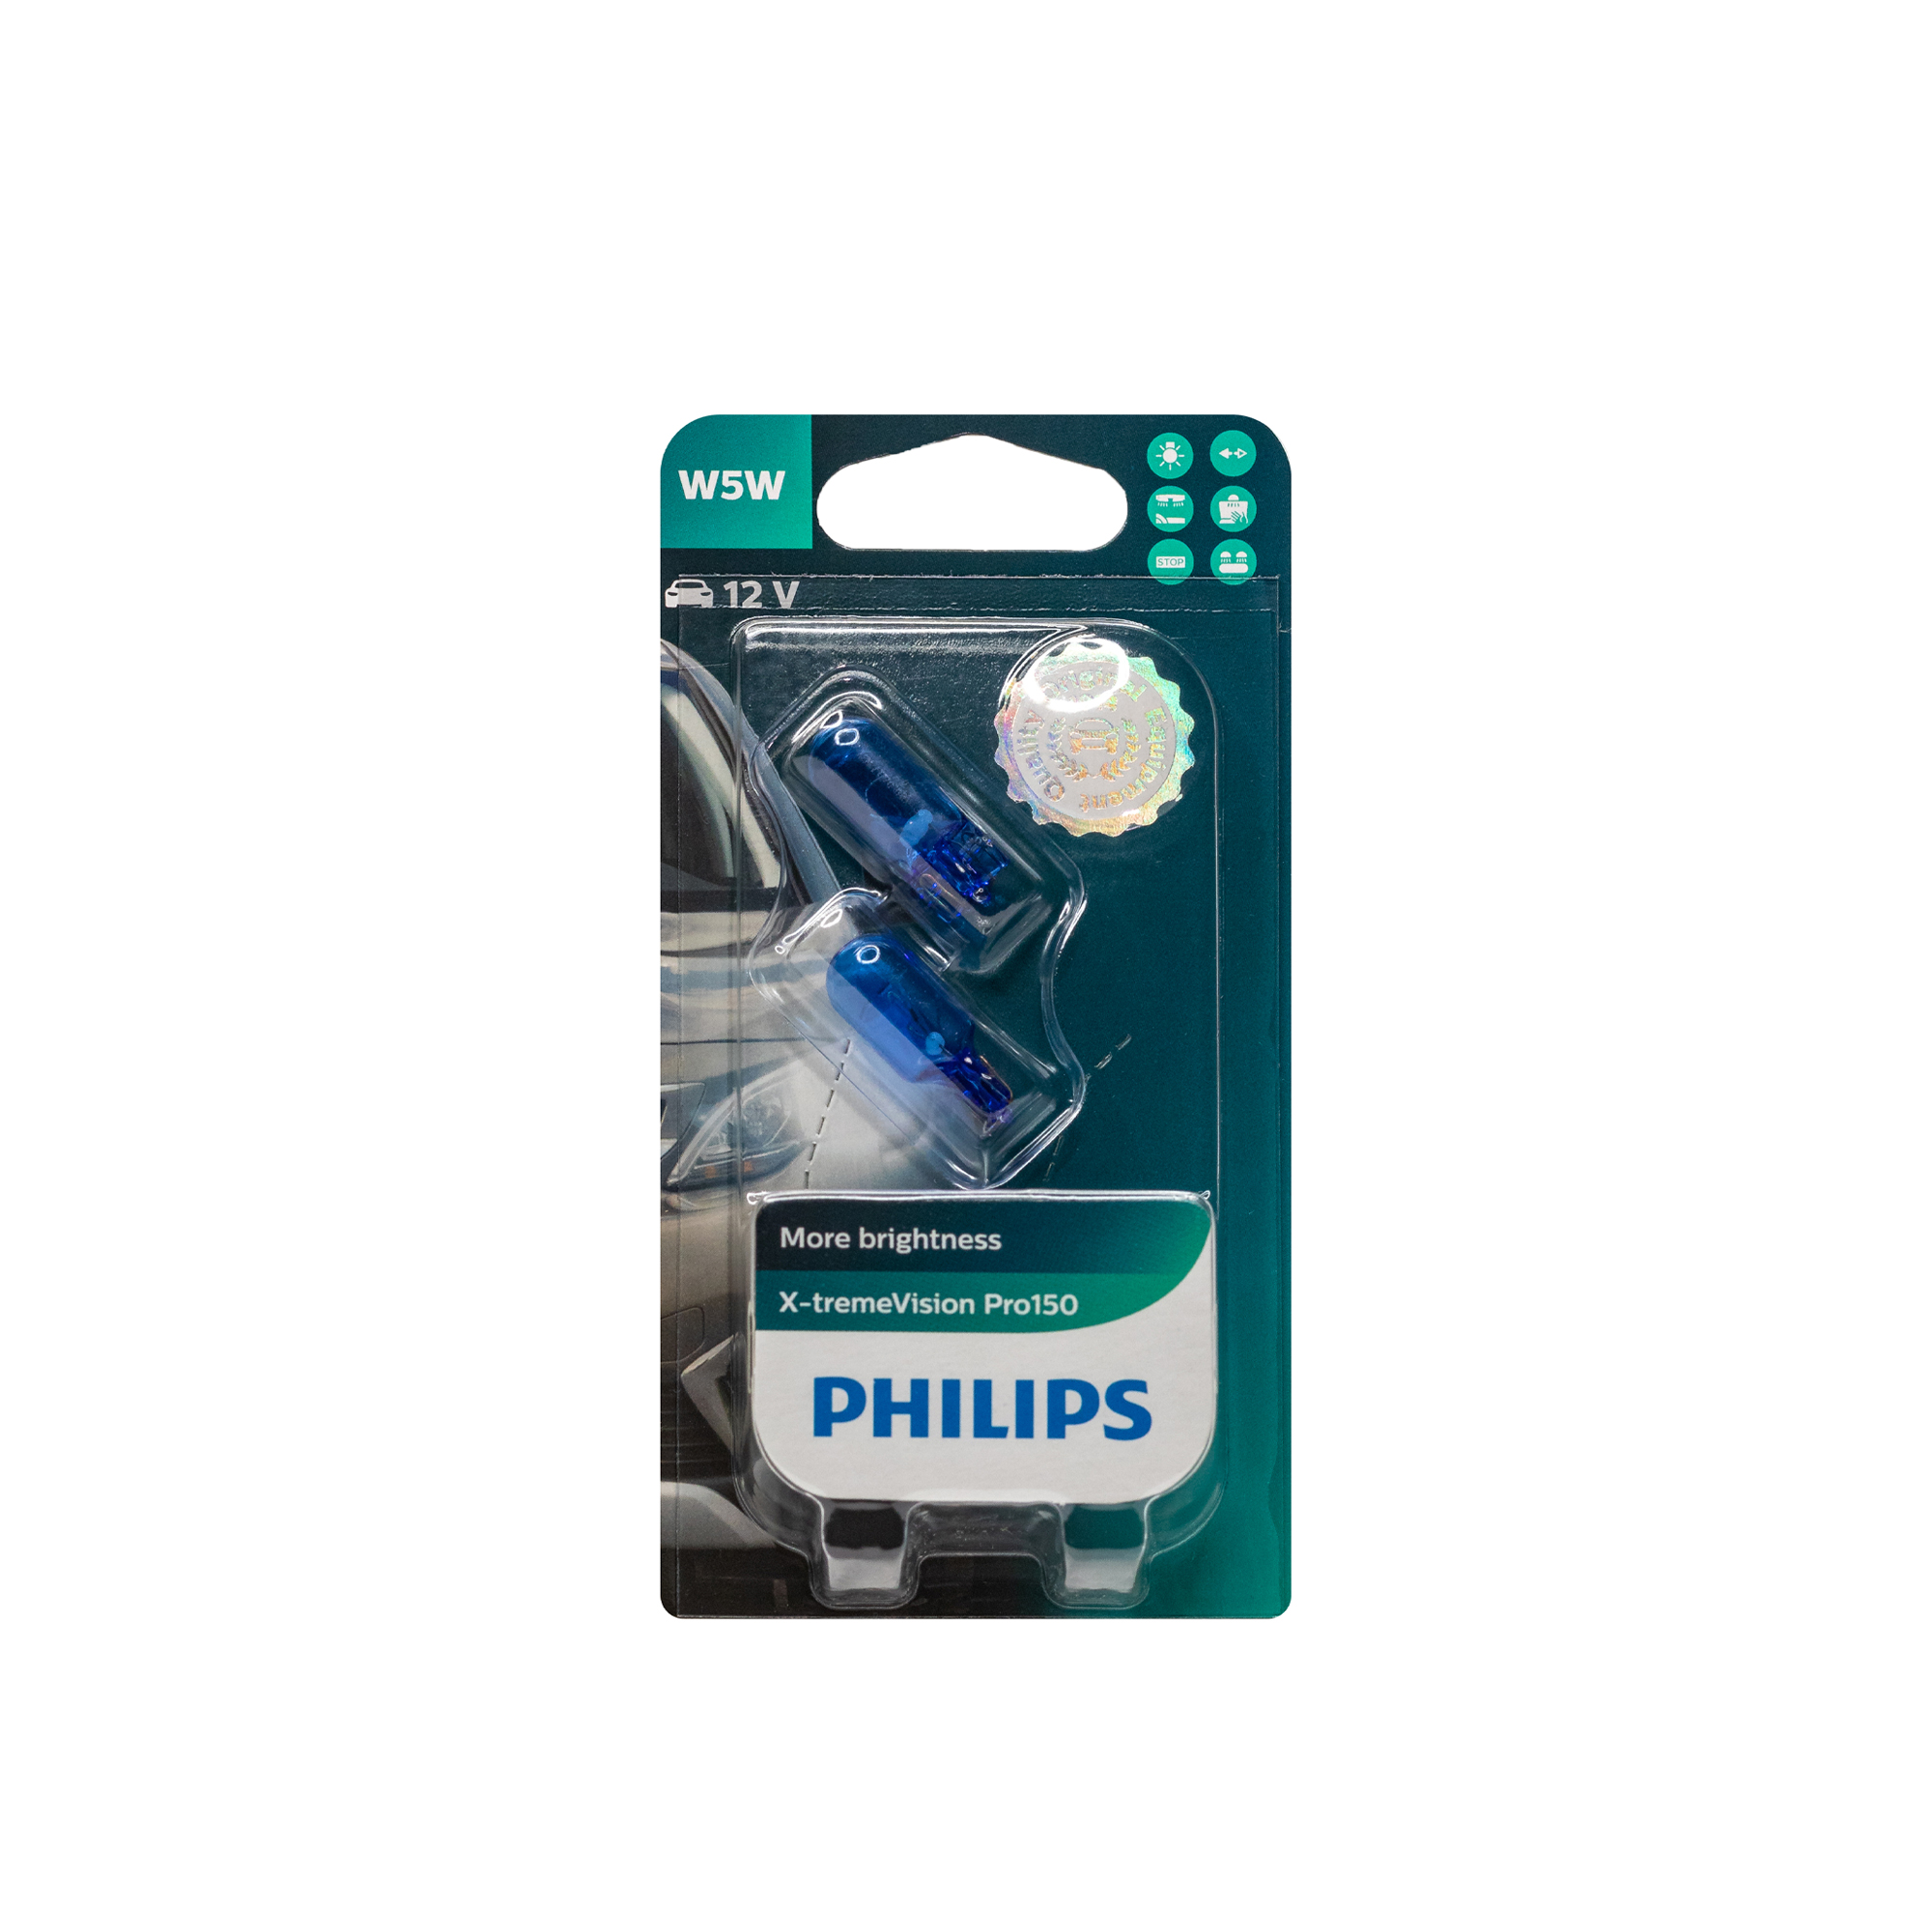 Philips W5W 12961XVPB2 X-tremeVision Pro150 2er-Blister